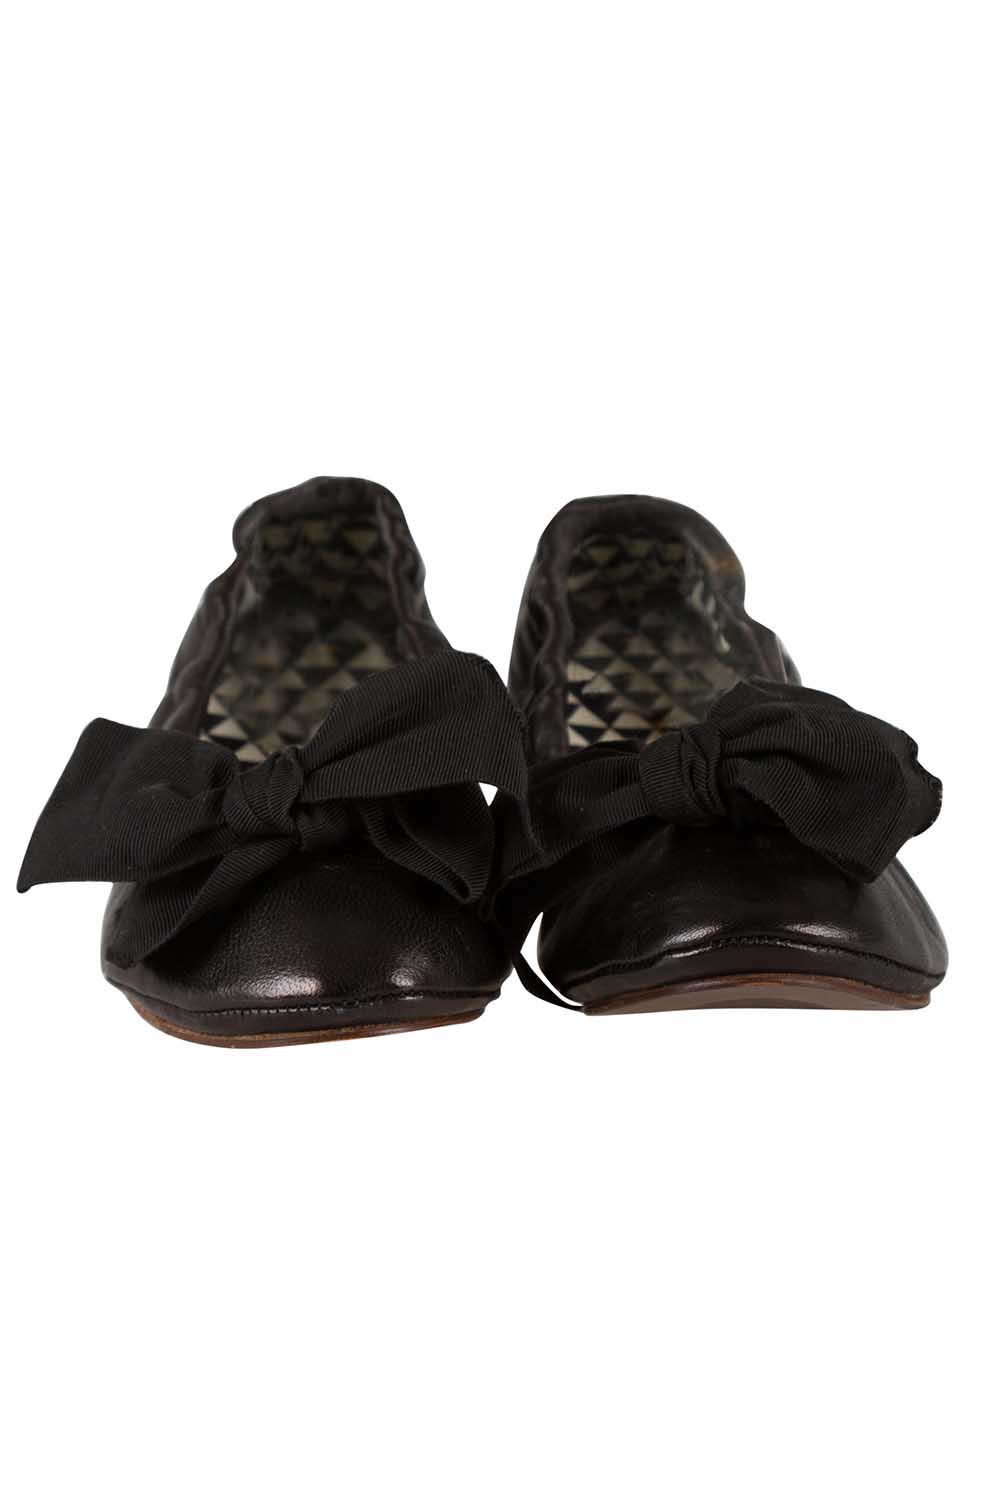 

Isabel Marant Metallic Black Leather Bow Scrunch Ballet Flats Size